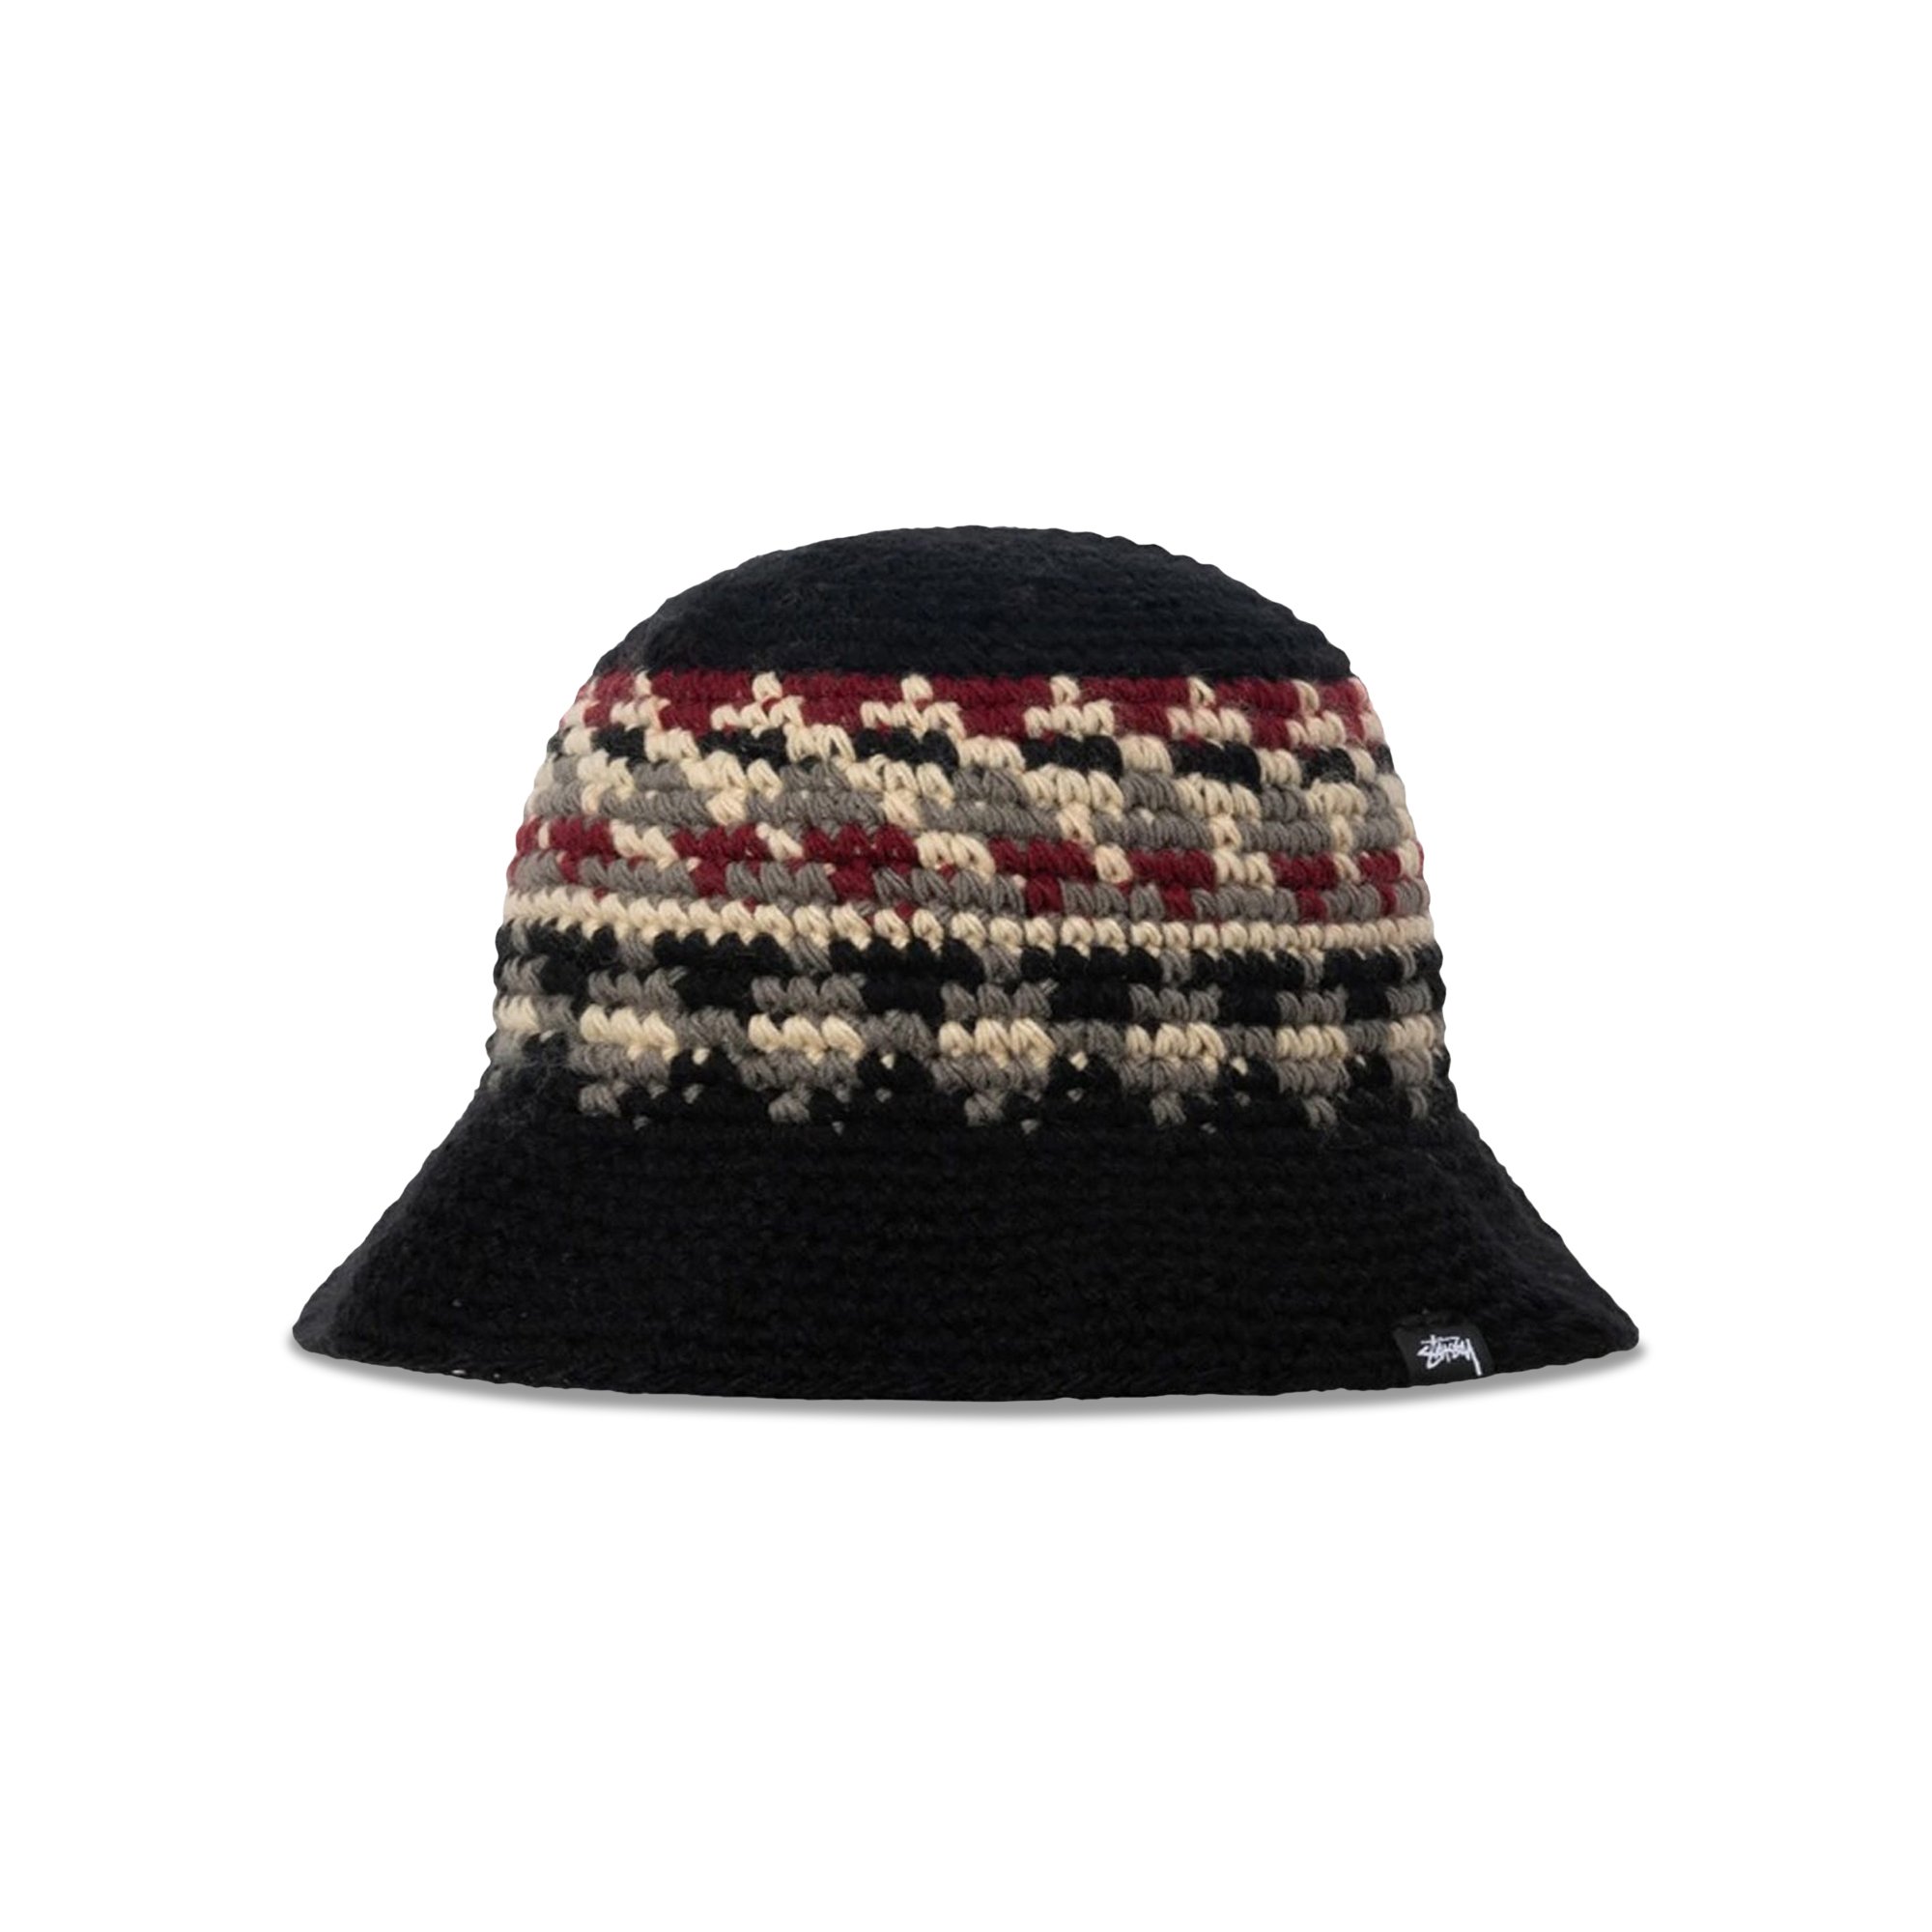 Buy Stussy Fairisle Bucket Hat 'Black' - 1321140 BLAC | GOAT